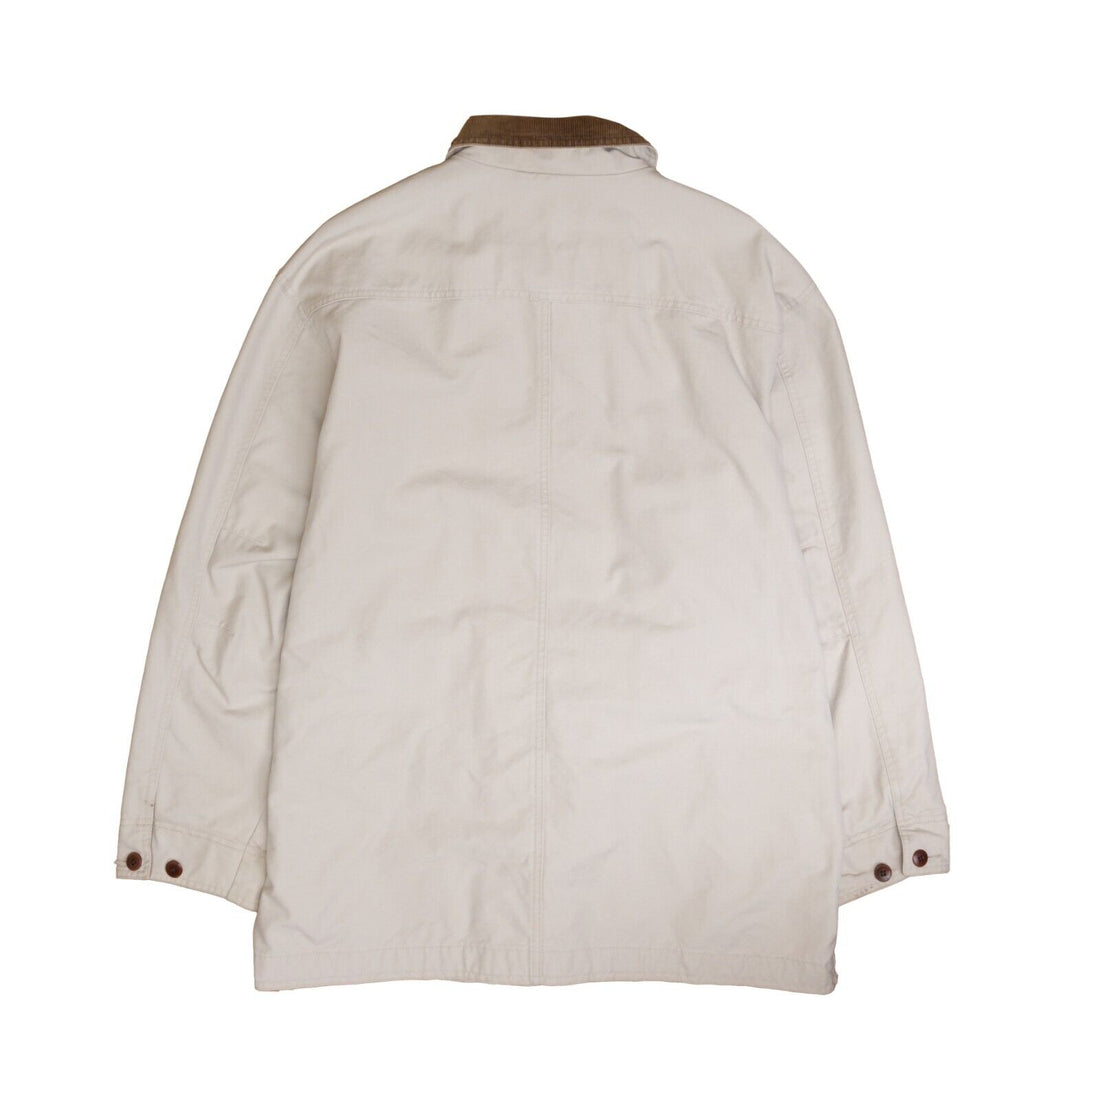 Vintage LL Bean Barn Work Coat Jacket Size Large White Corduroy Trim